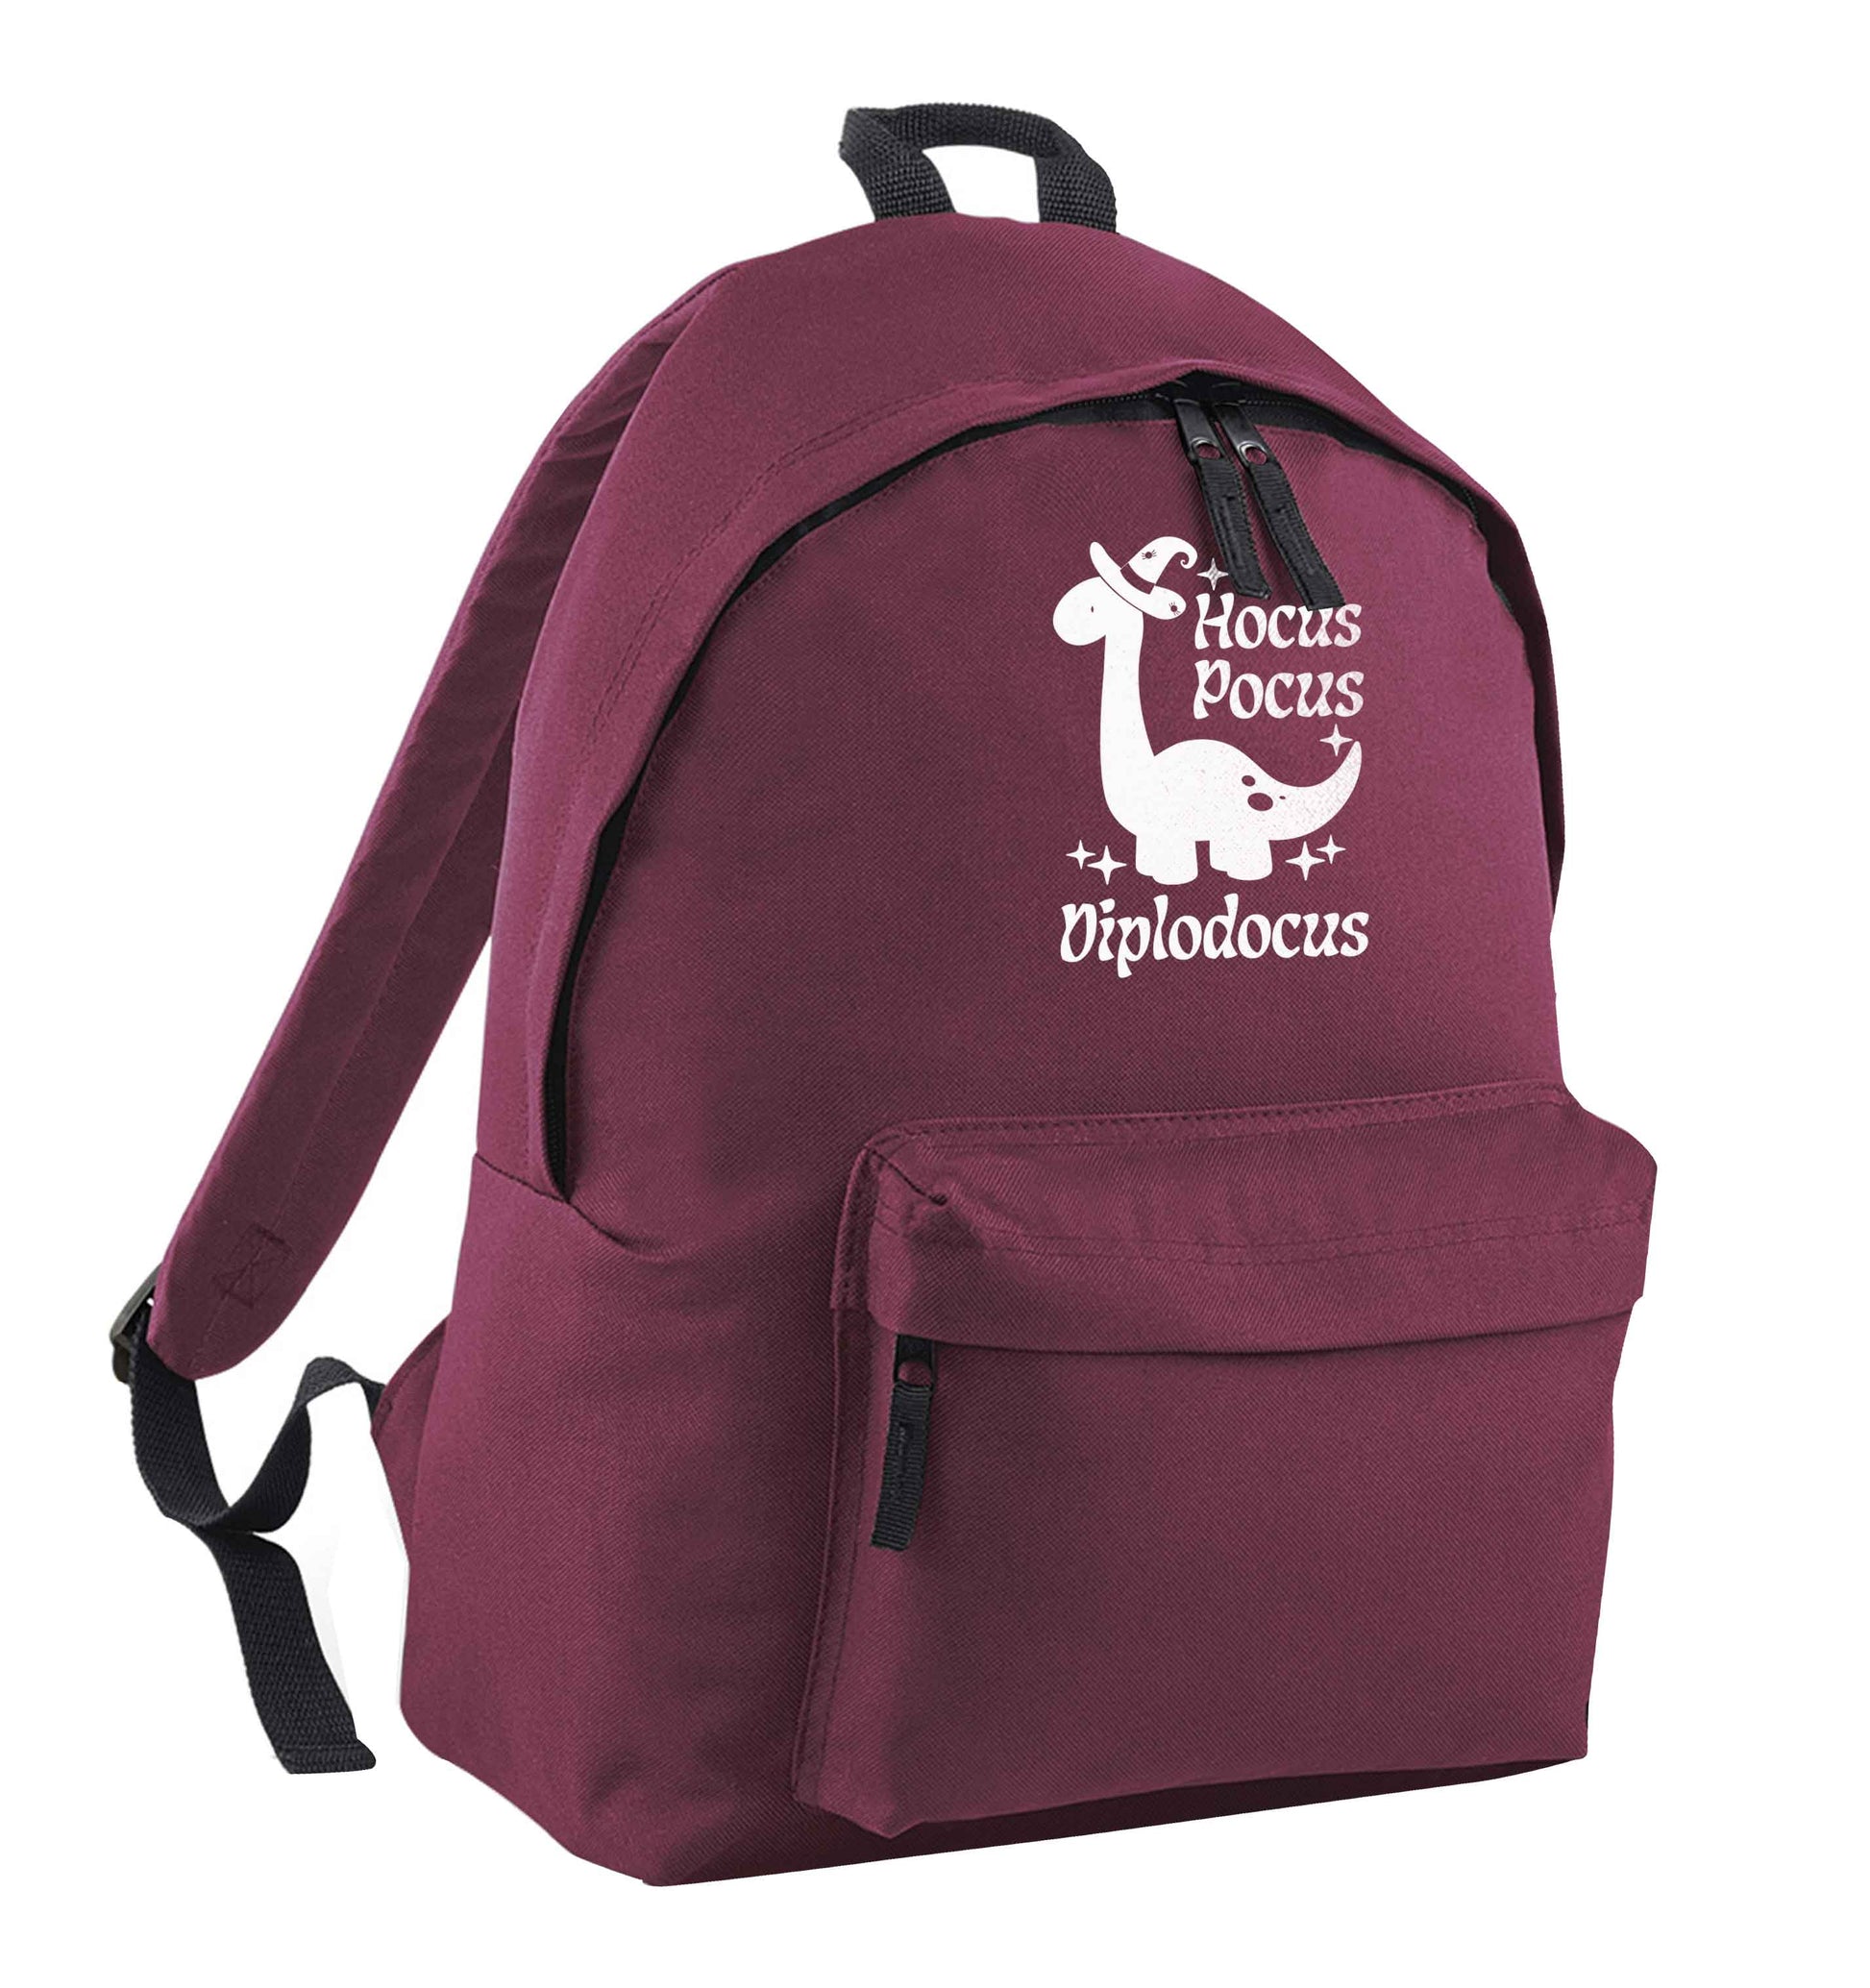 Hocus pocus diplodocus Kit maroon children's backpack